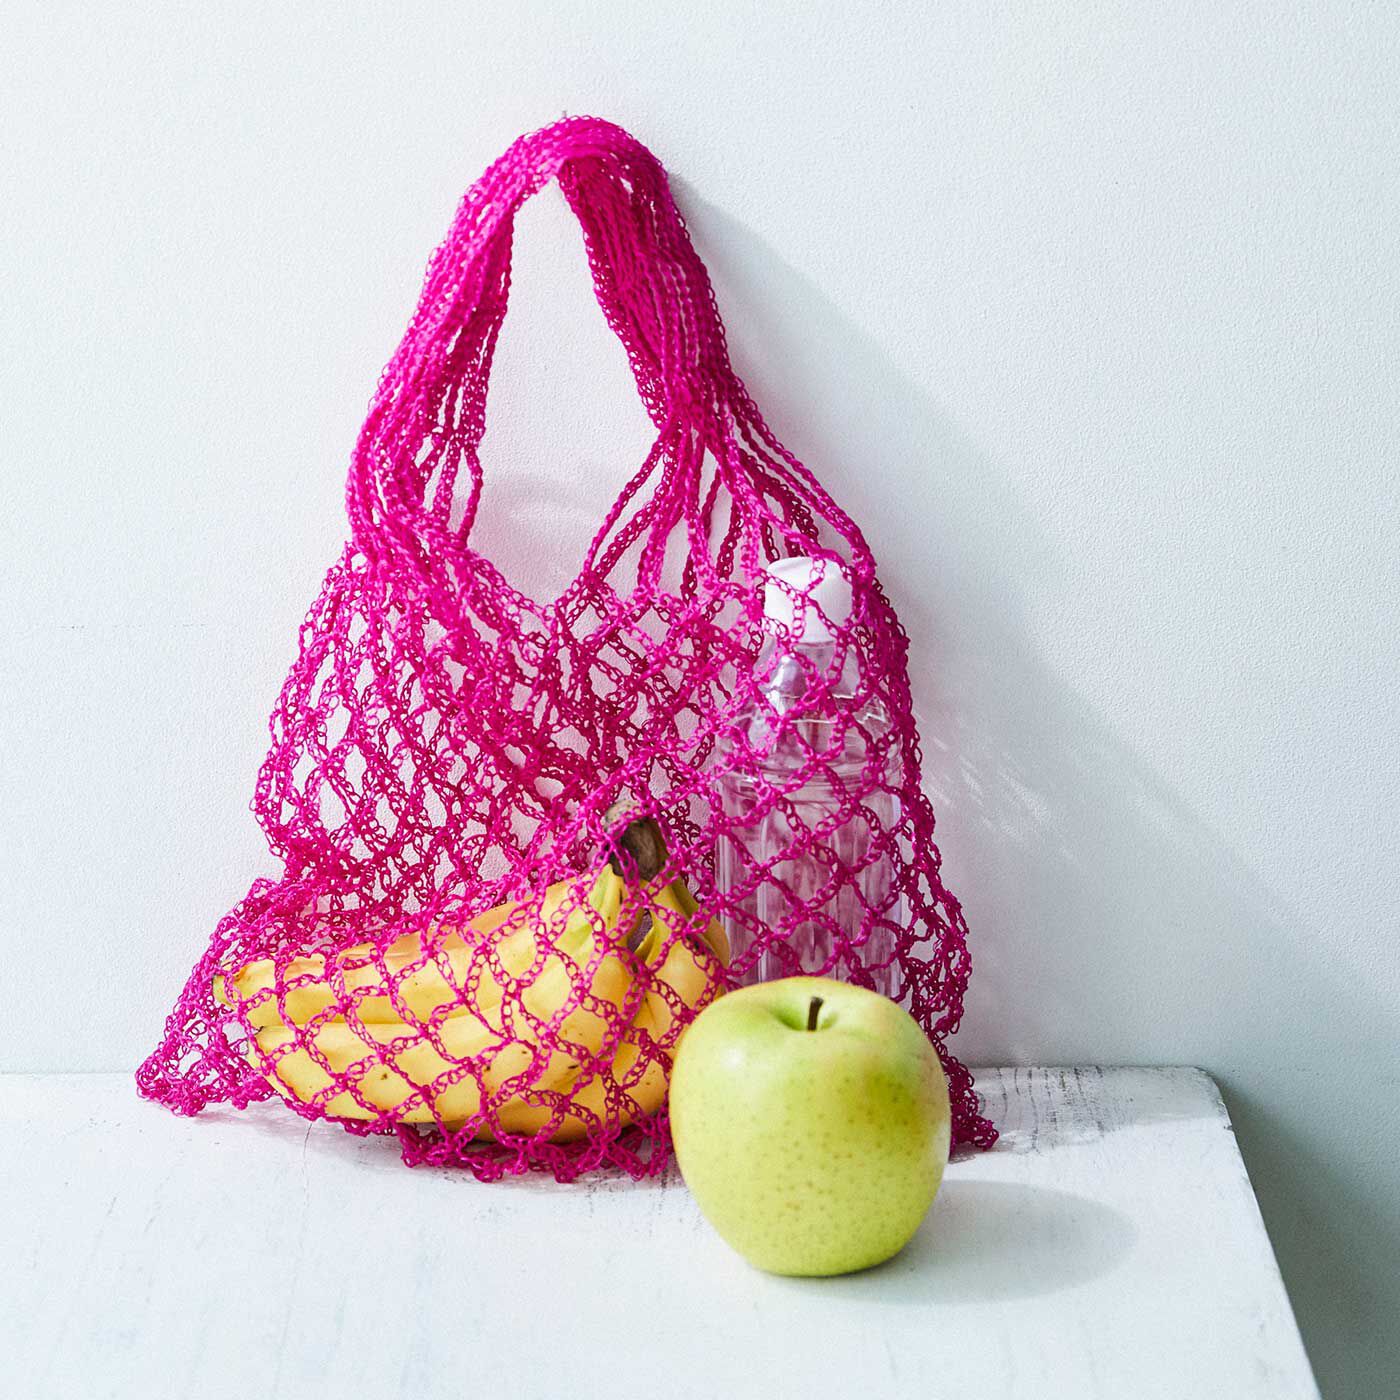 Couturier special|透かし編みバッグが編める　鮮やかプラコードの糸とミニブック「ＰａｔｔｅｒｎｓＮｏｔｅ」